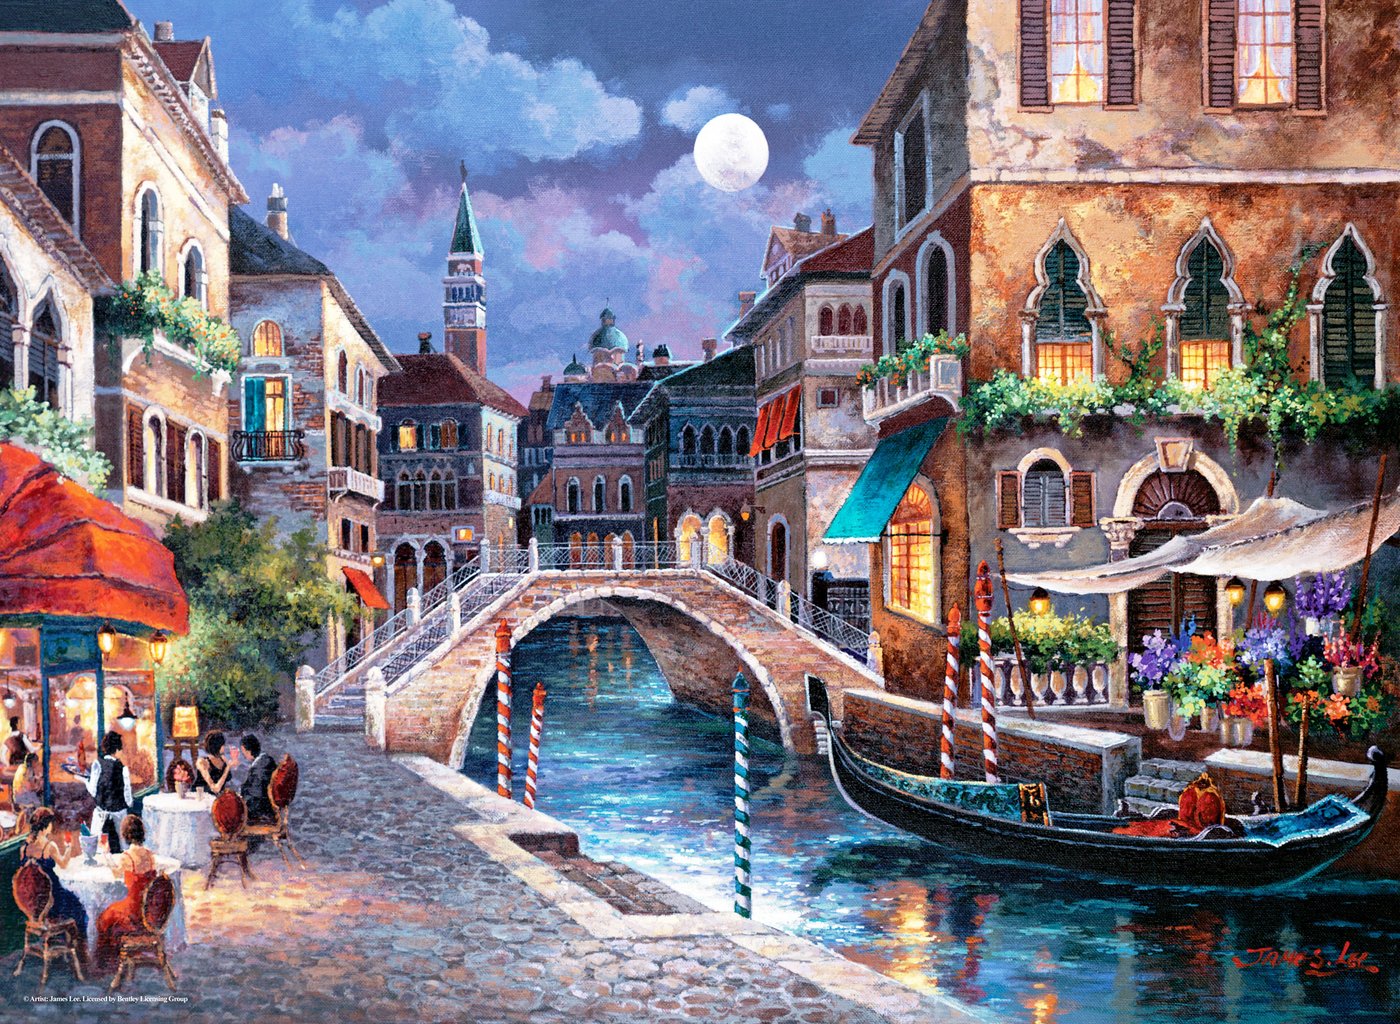 Anatolian - Streets of Venice II - 1000 Piece Jigsaw Puzzle